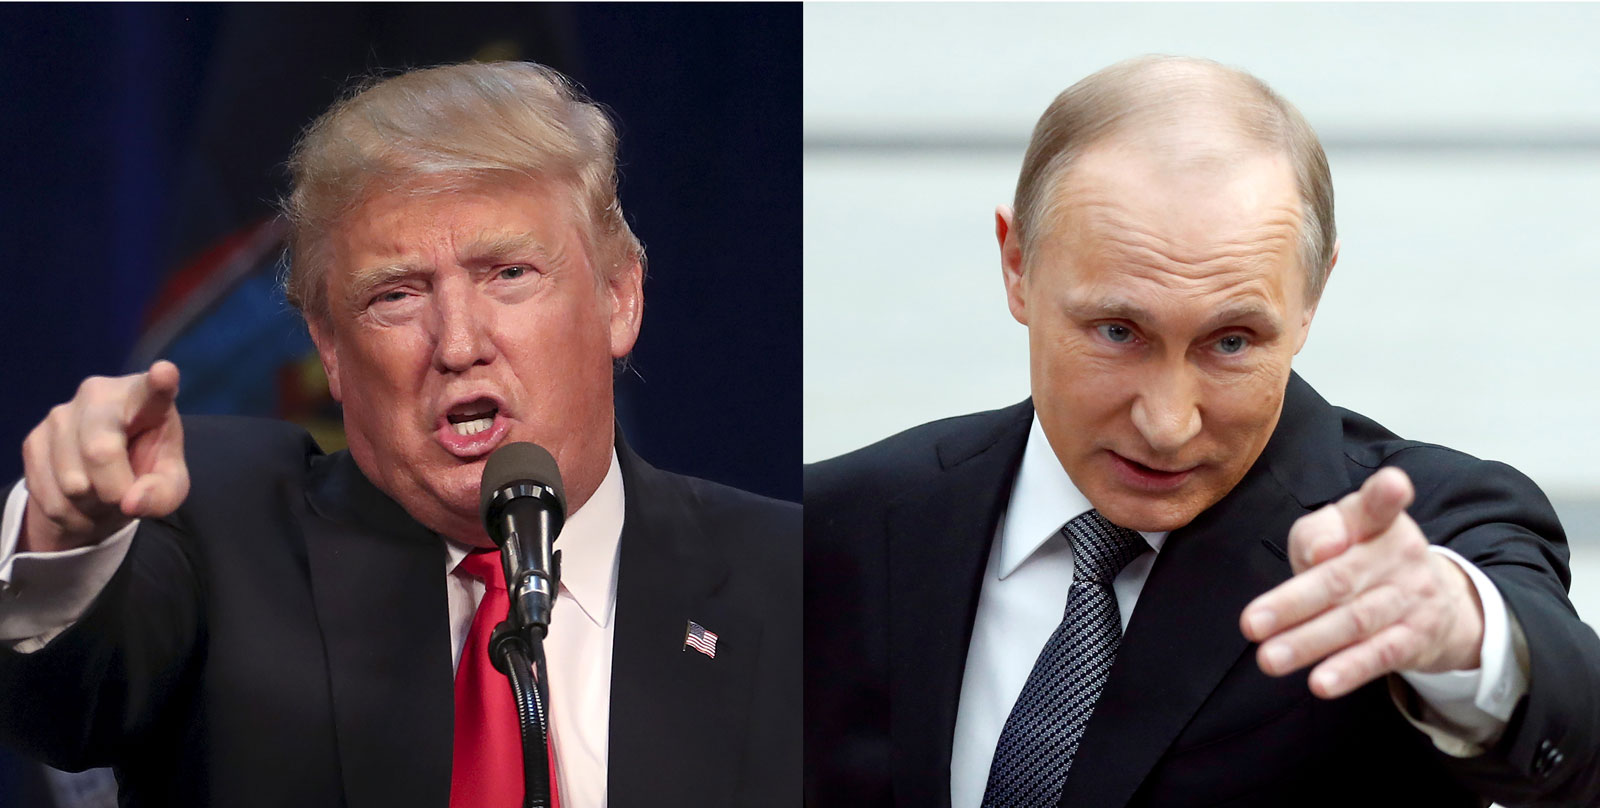 Donald Trump e Vladimir Putin